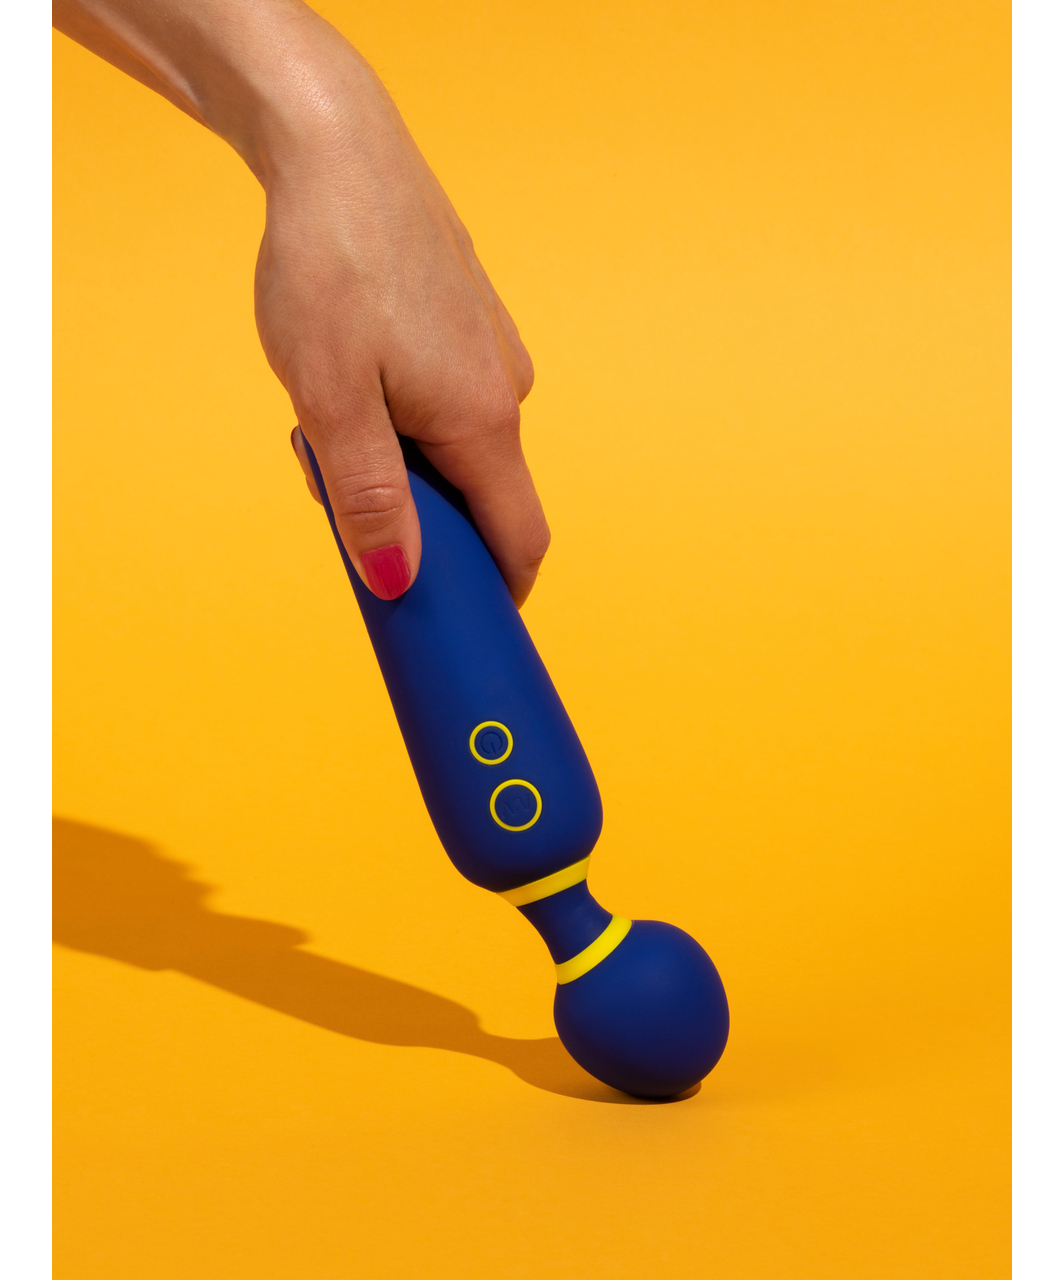 Romp Flip rechargeable wand massager